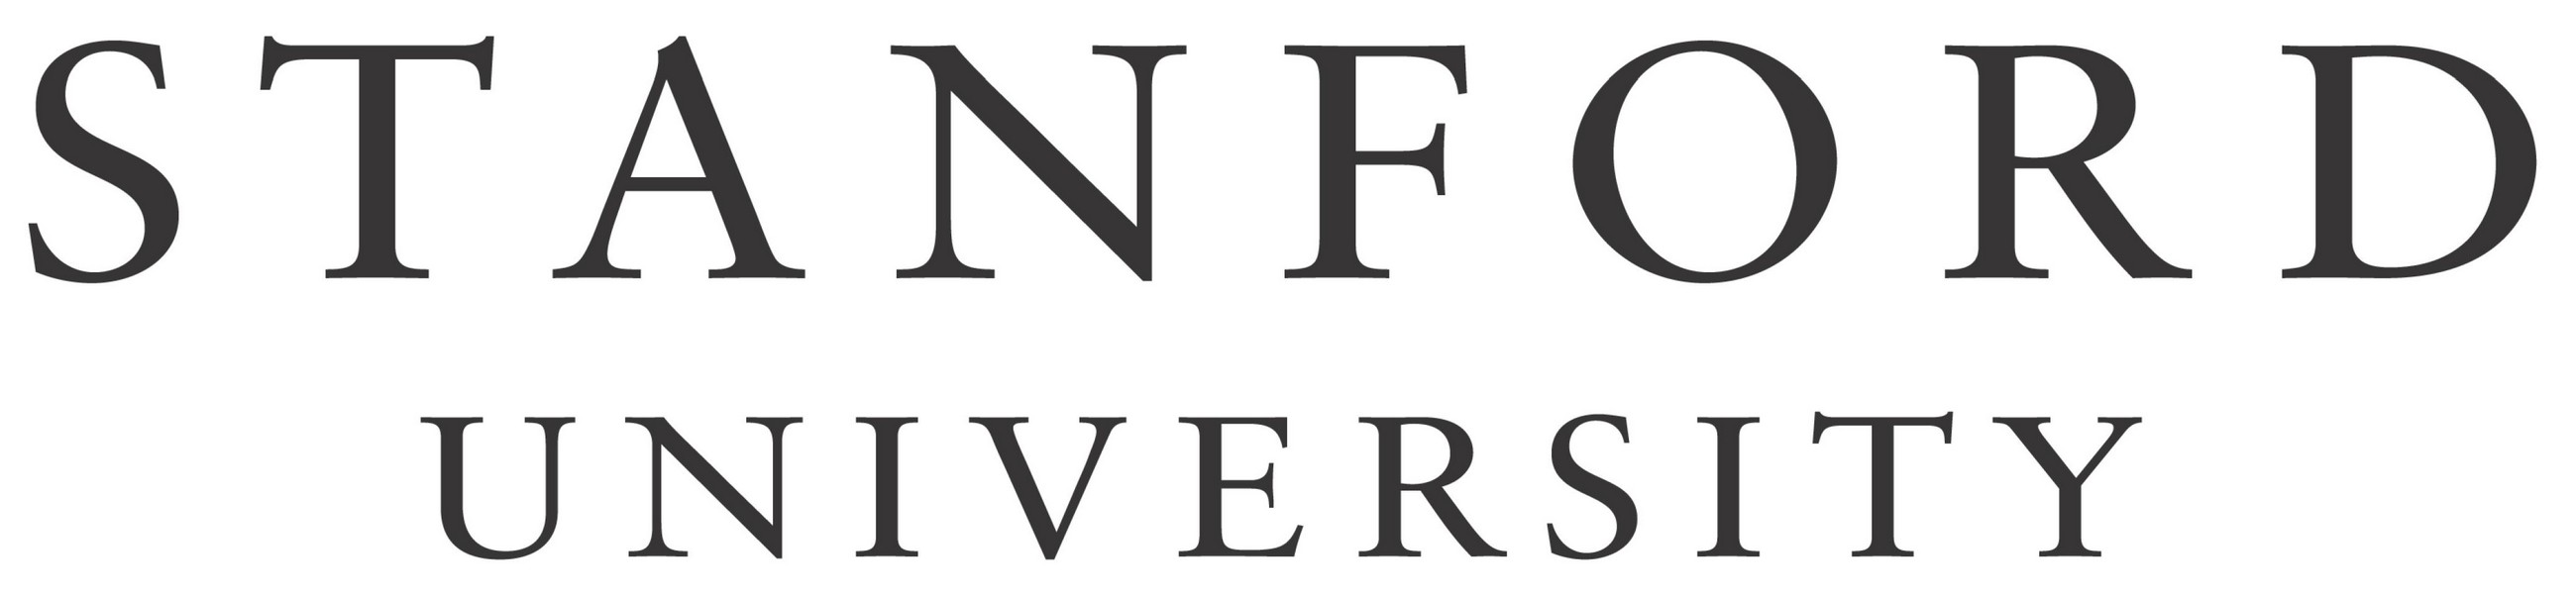 stanford-university-logo.jpg